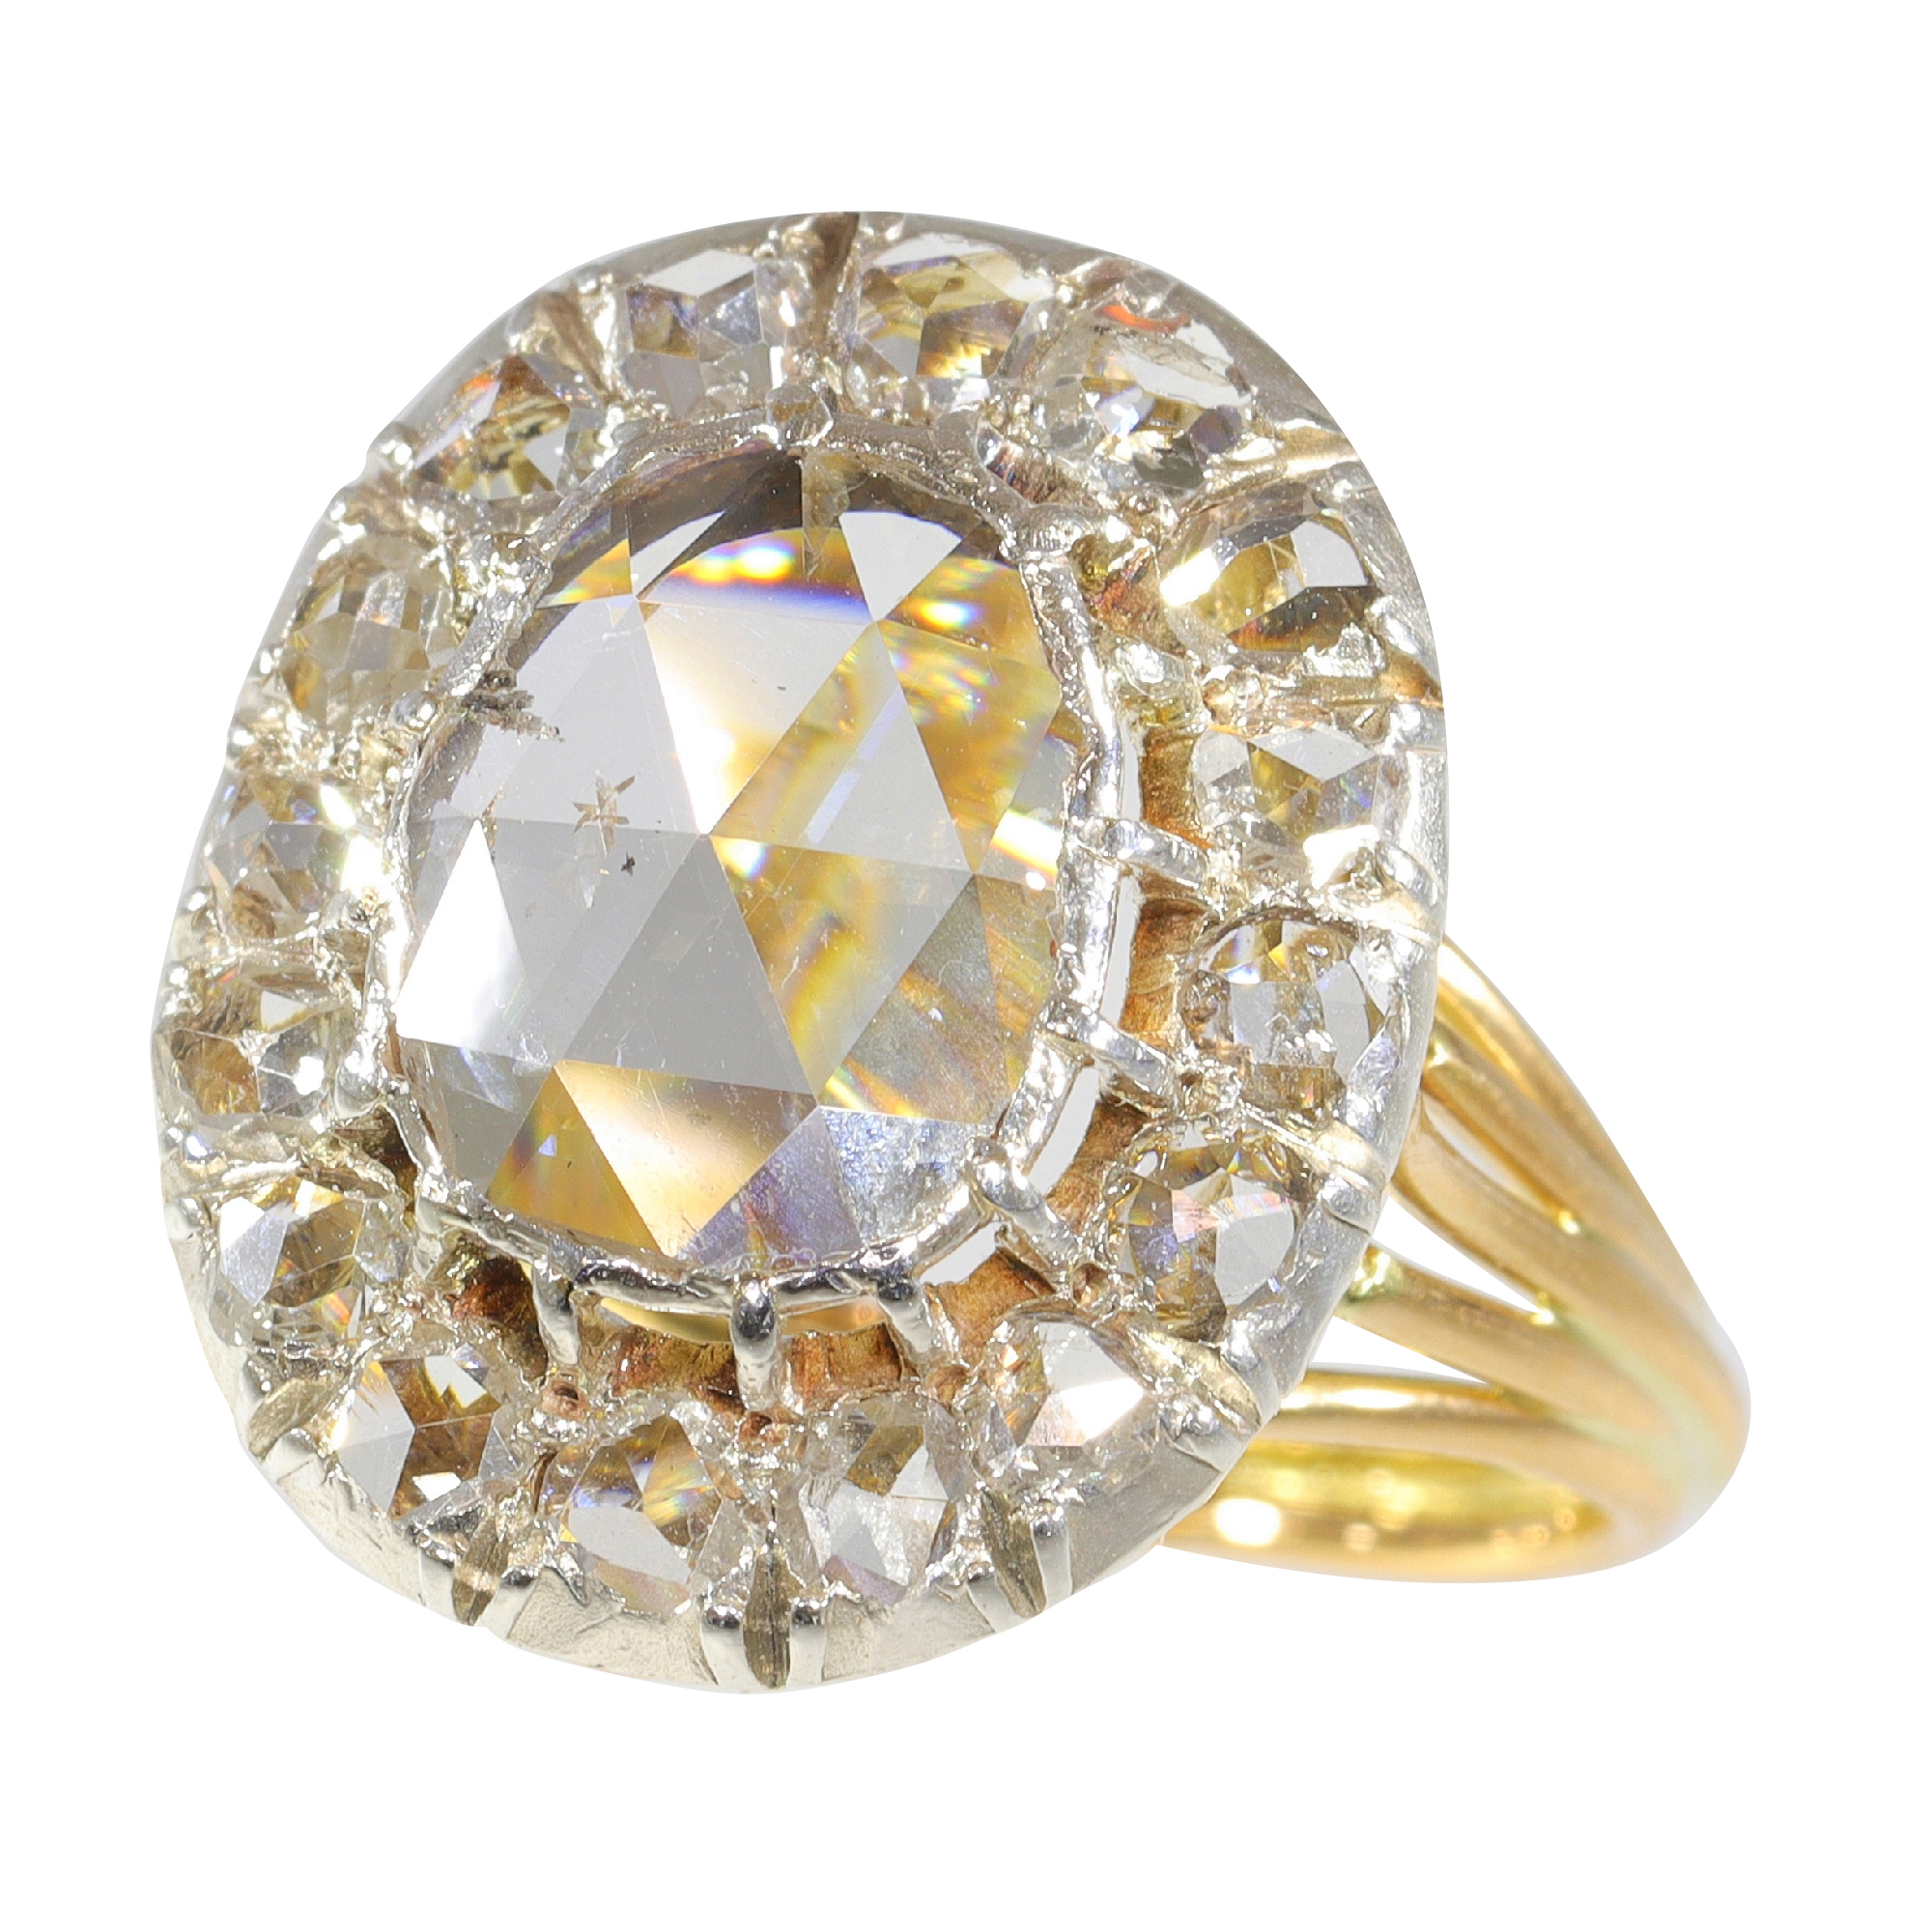 Vintage Romance: The Journey of a Diamond Ring